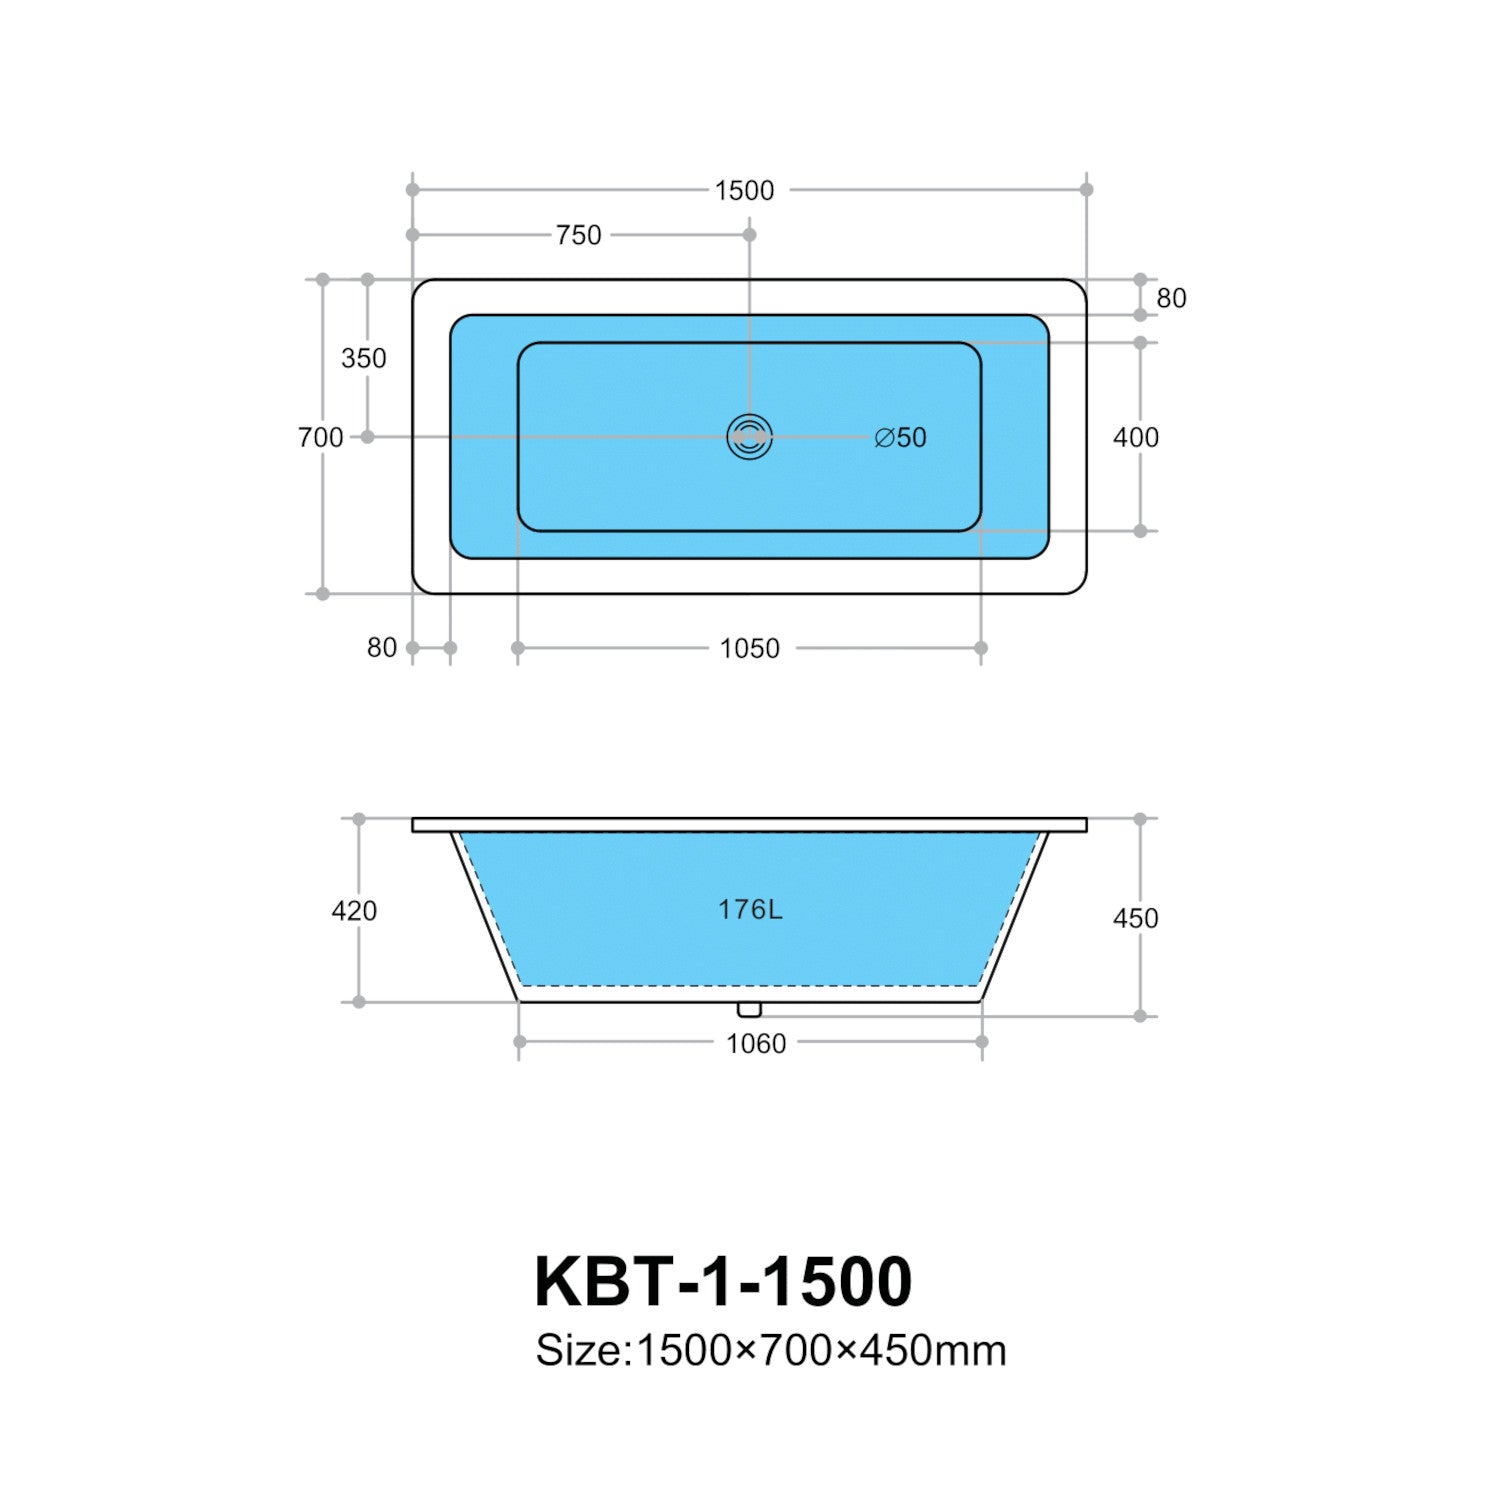 DIB1500 KBT-1-1500 Bathtub: Stylish and Compact, size